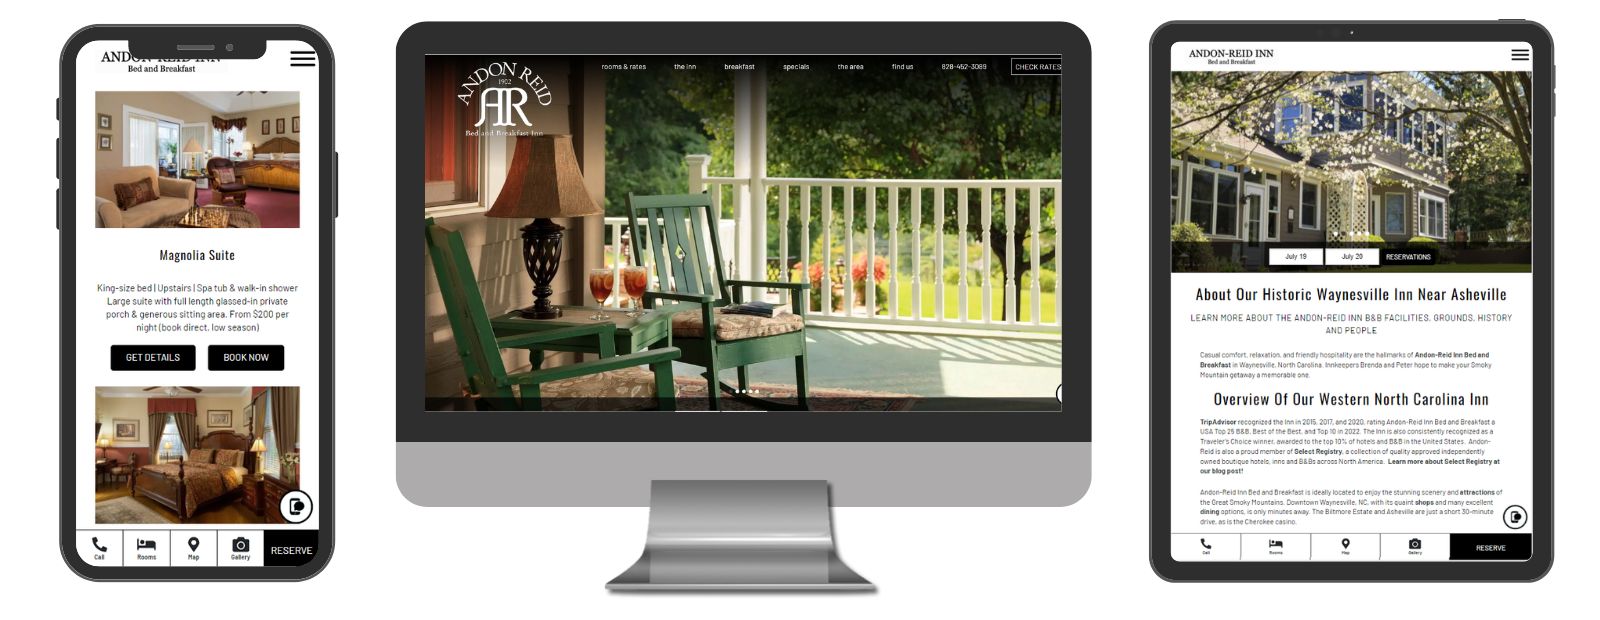 Andon-Reid Inn website on a desktop, mobile and tablet device.